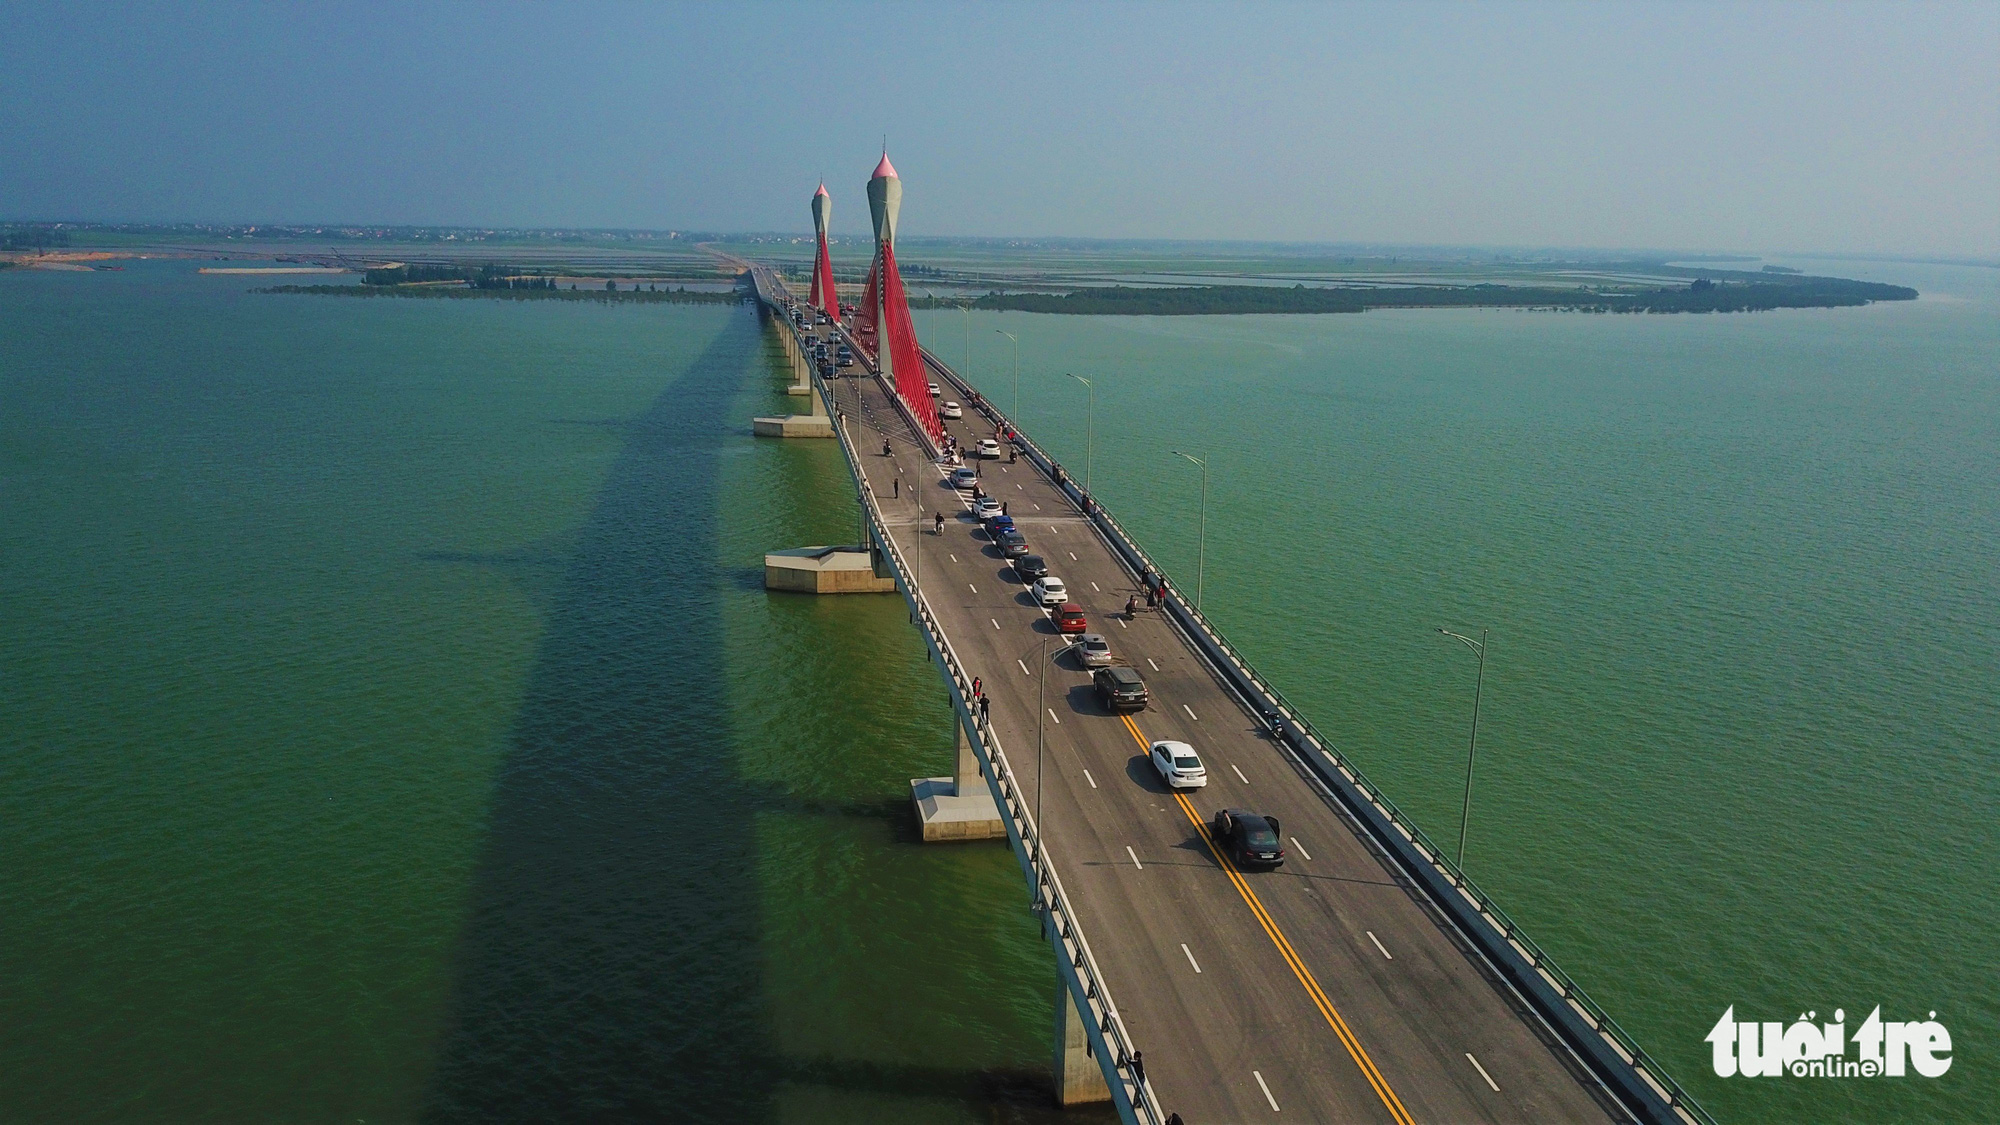 In Vietnam, scores of people block new bridge to take photos